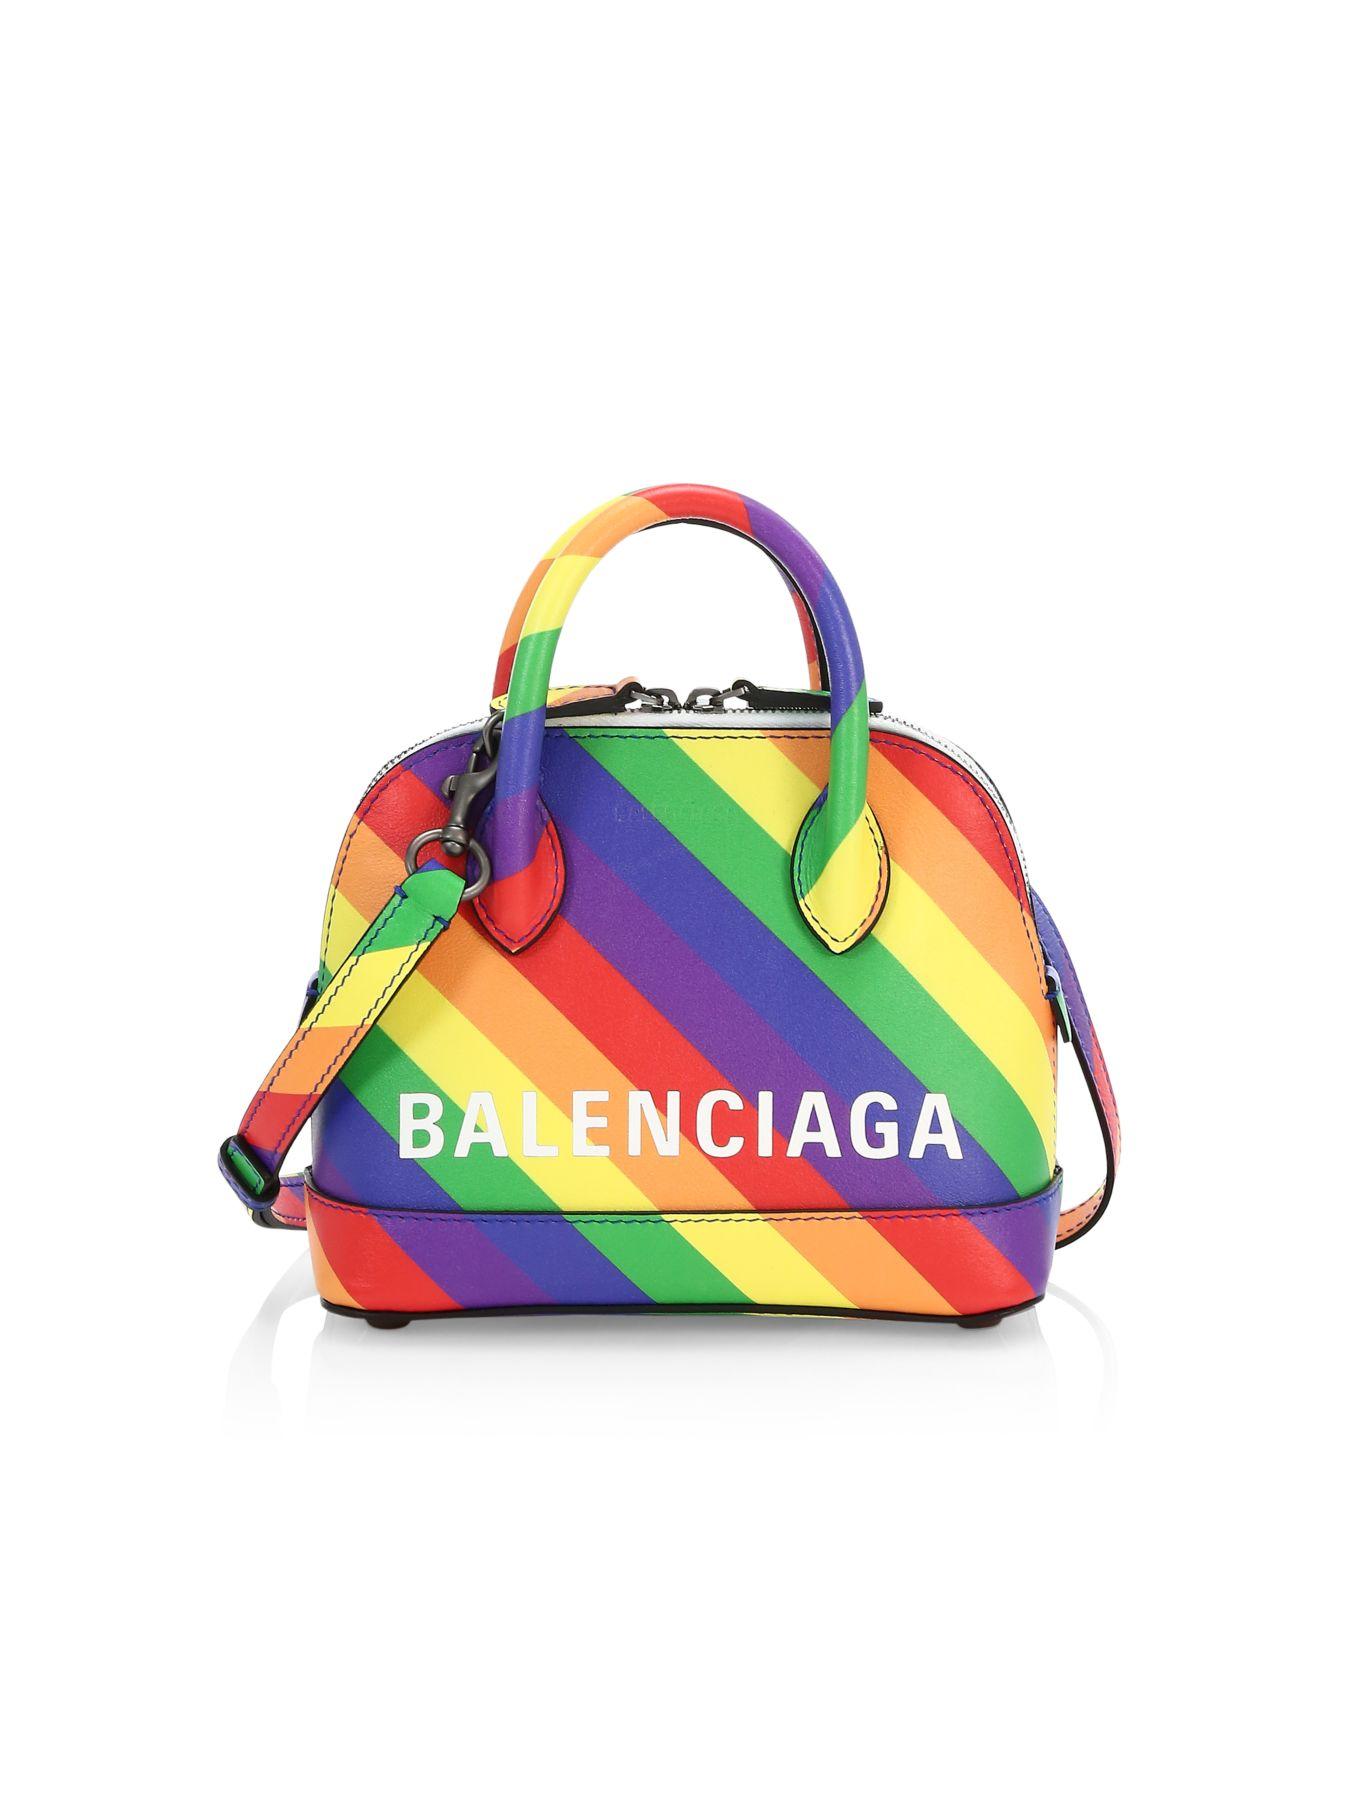 balenciaga rainbow bag